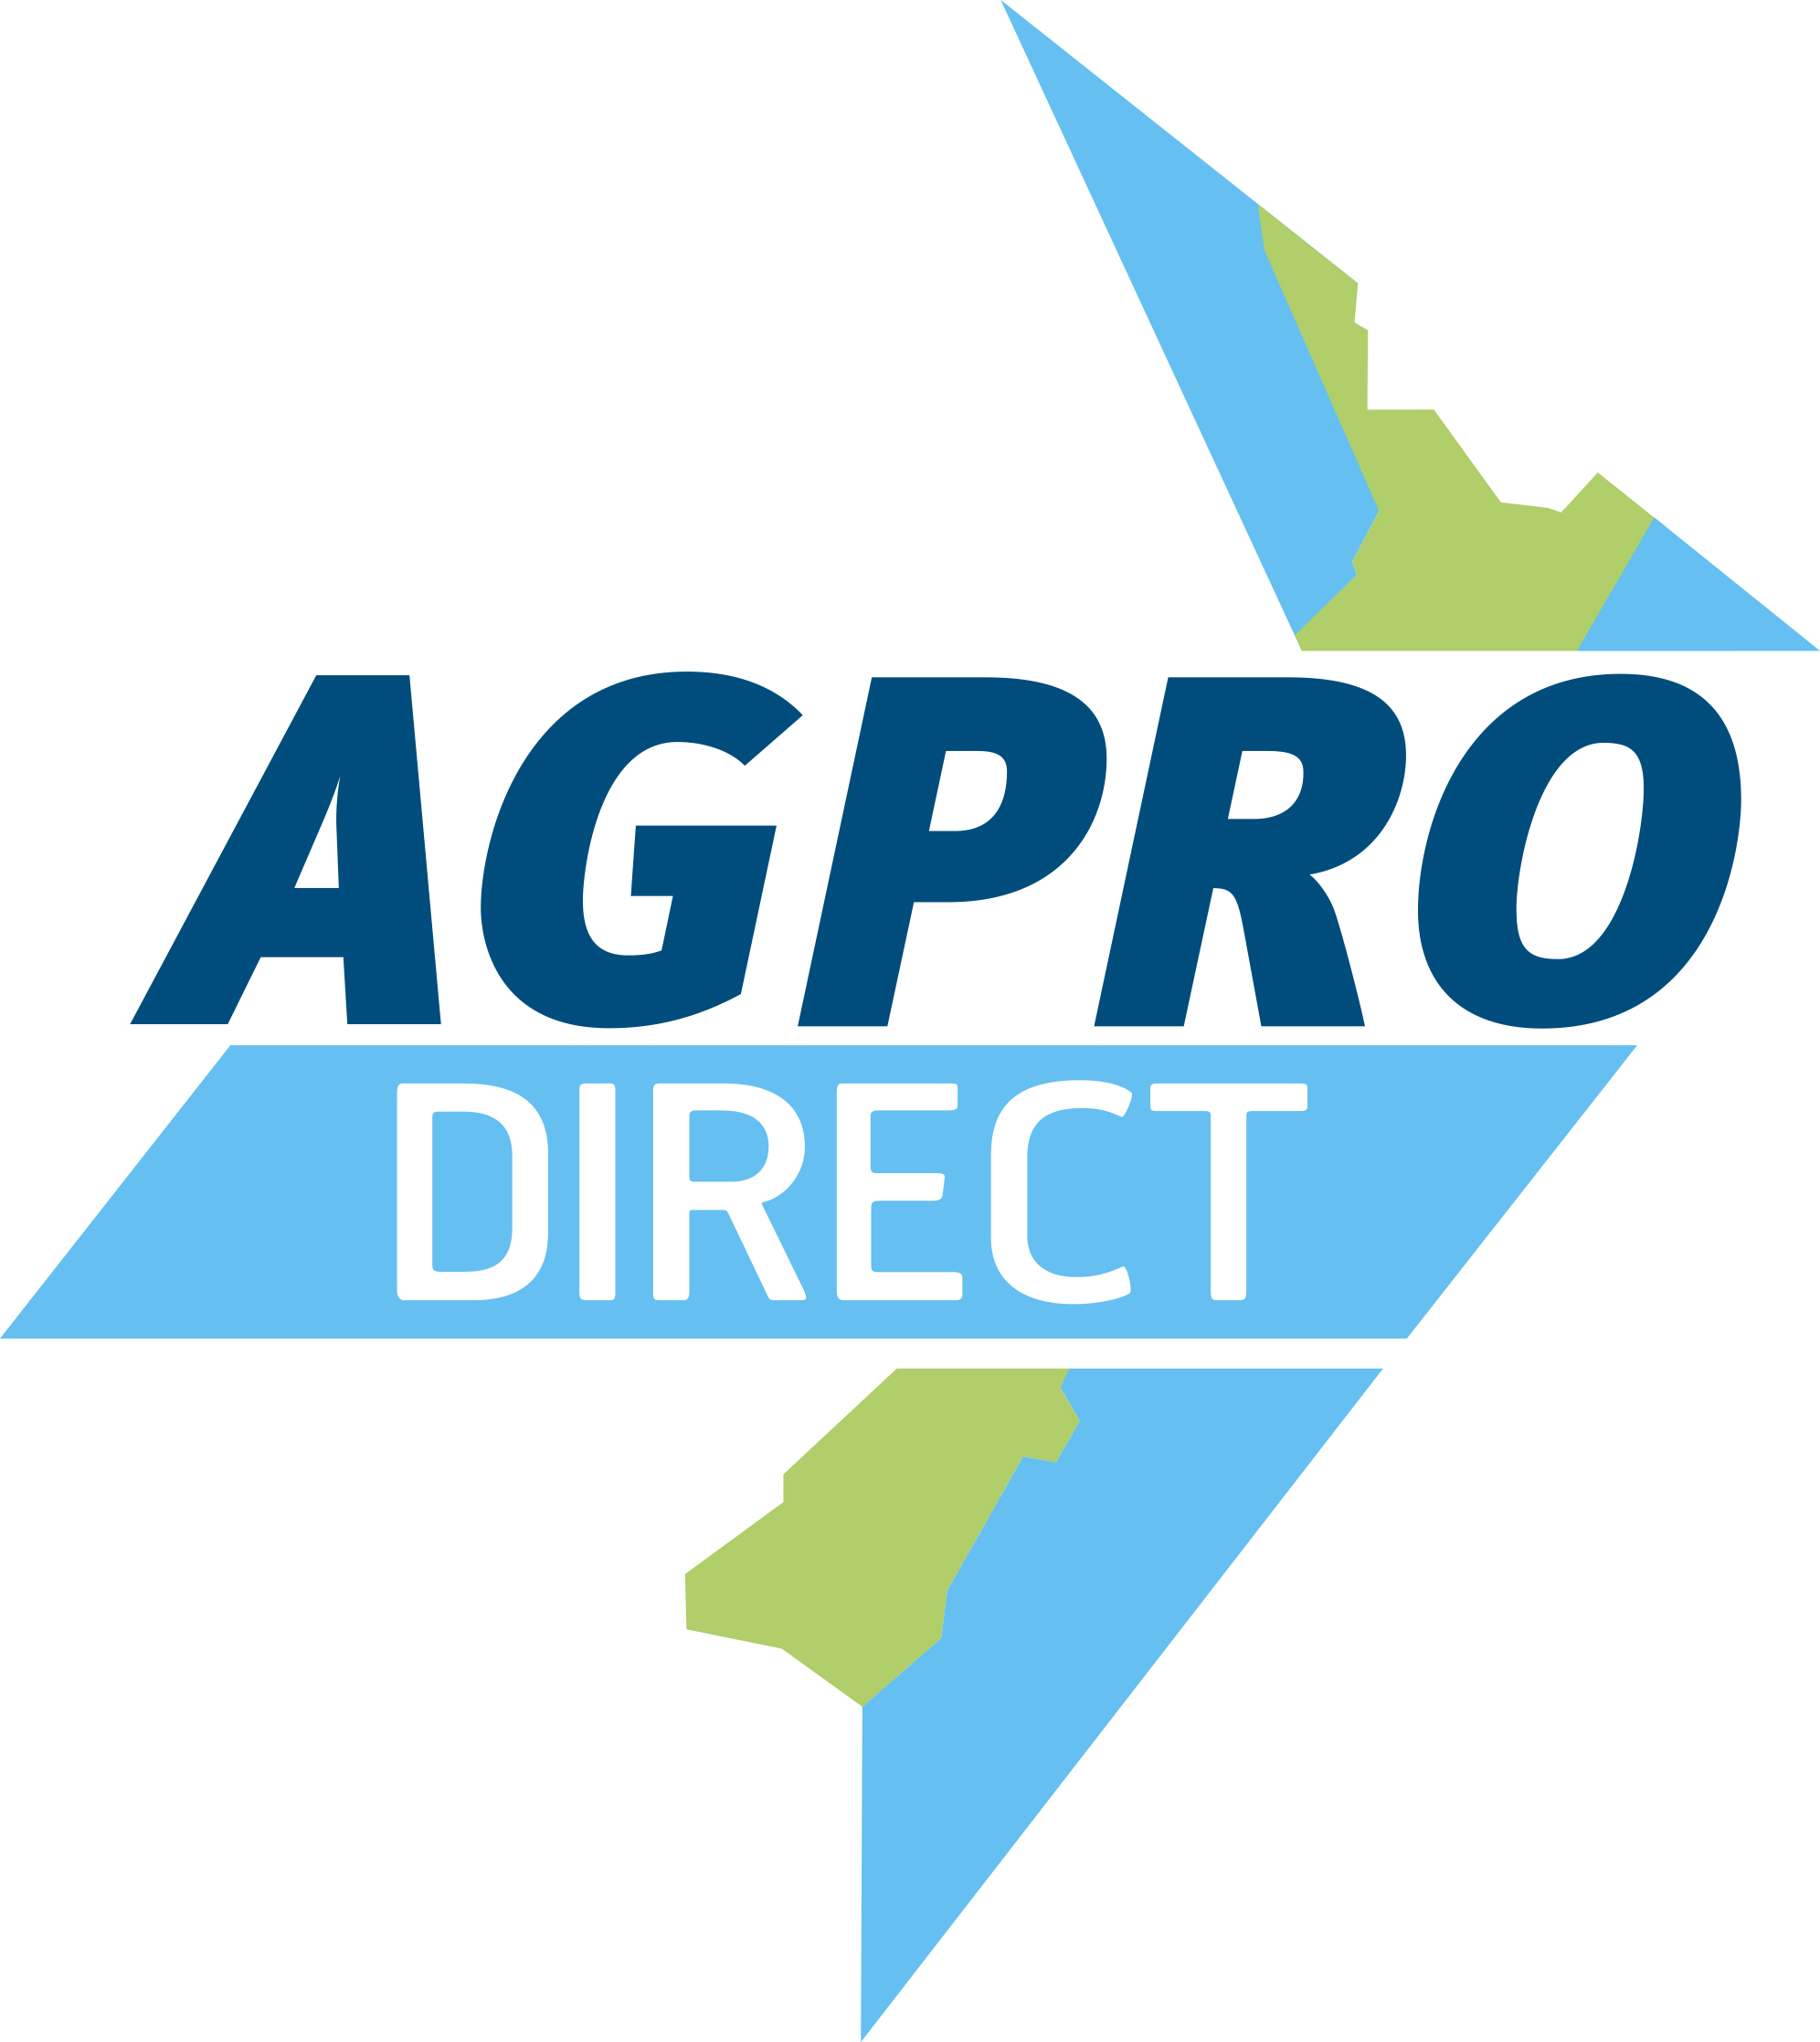 AGPRO Direct Blue